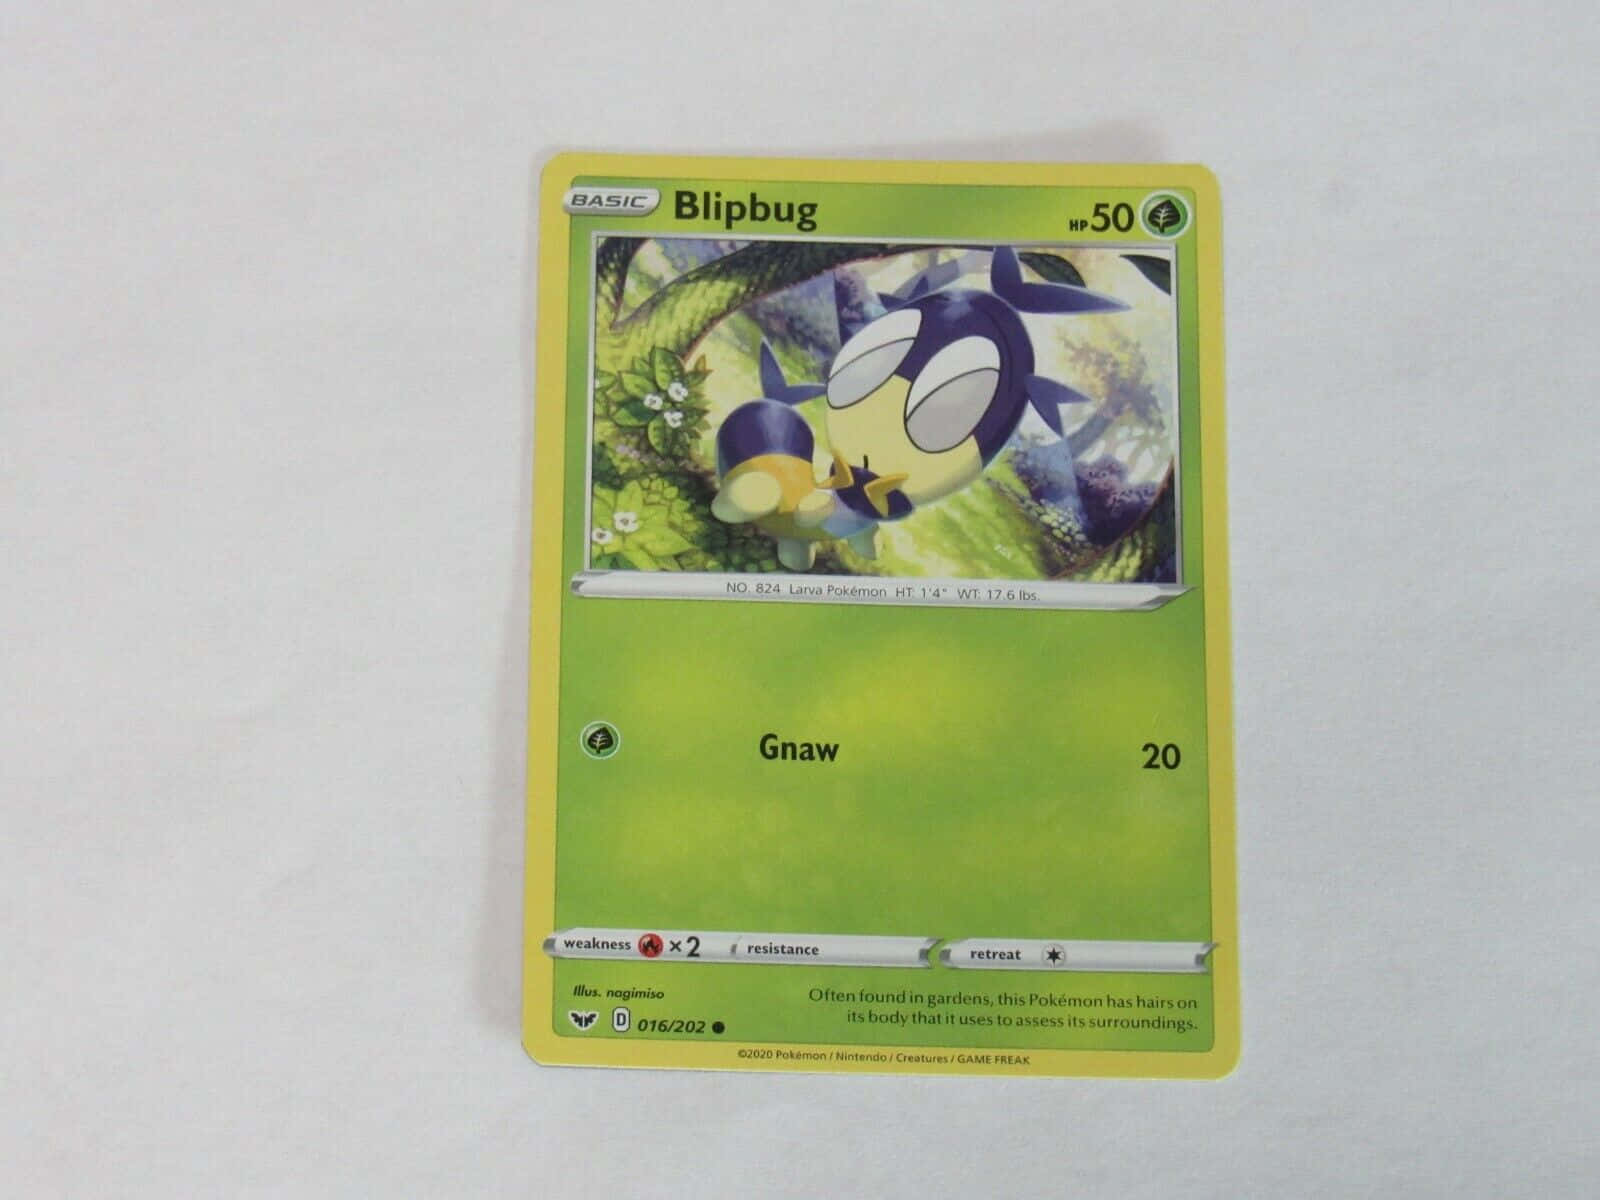 Pokémon Blipbug Game Card Wallpaper